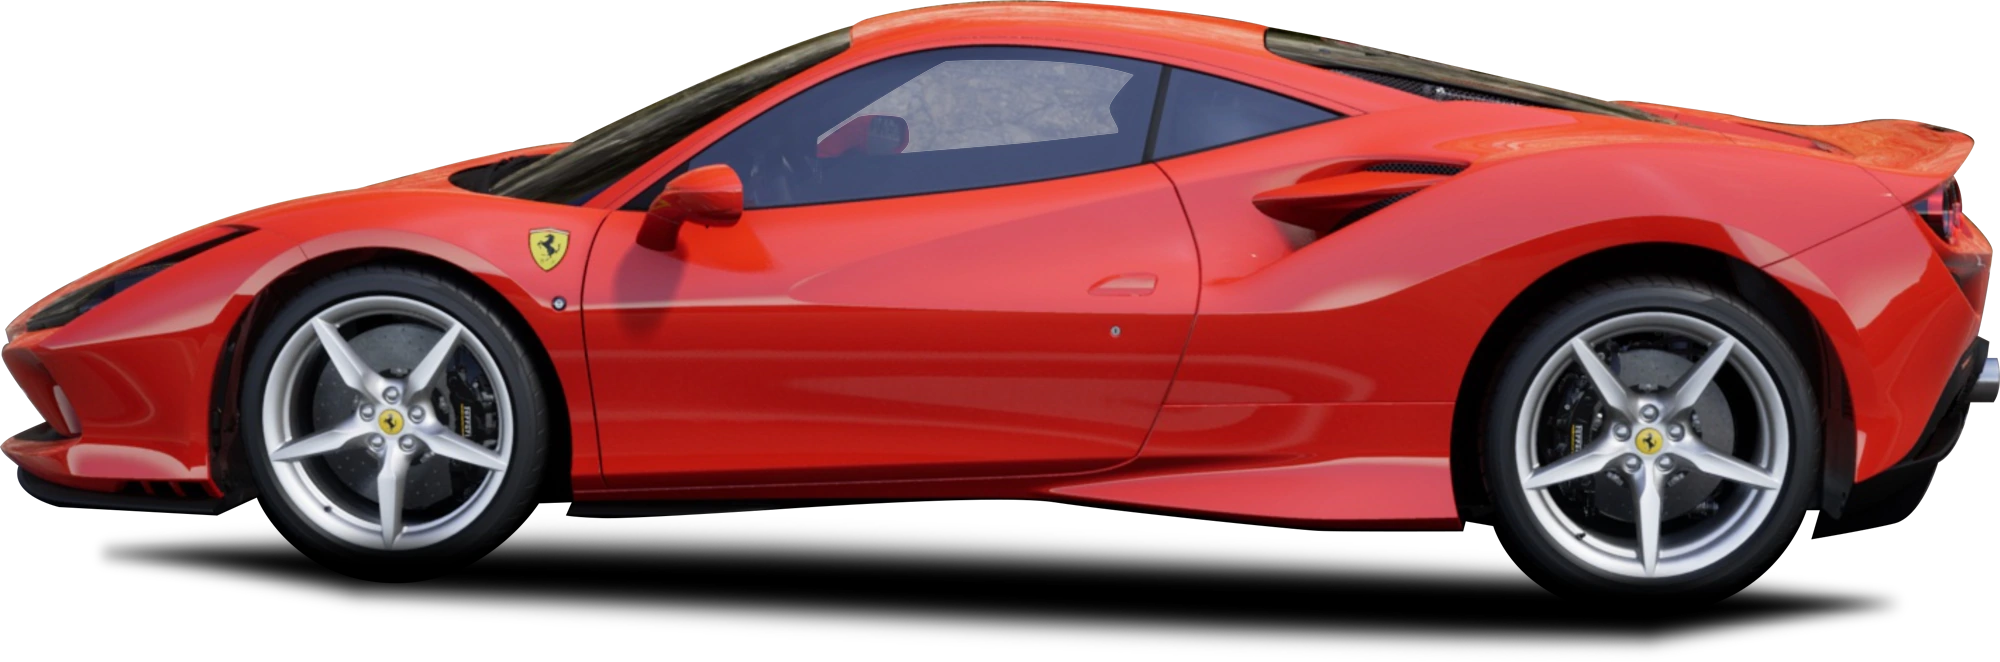 Ferrari F8 Tributo PNG Transparant Beeld